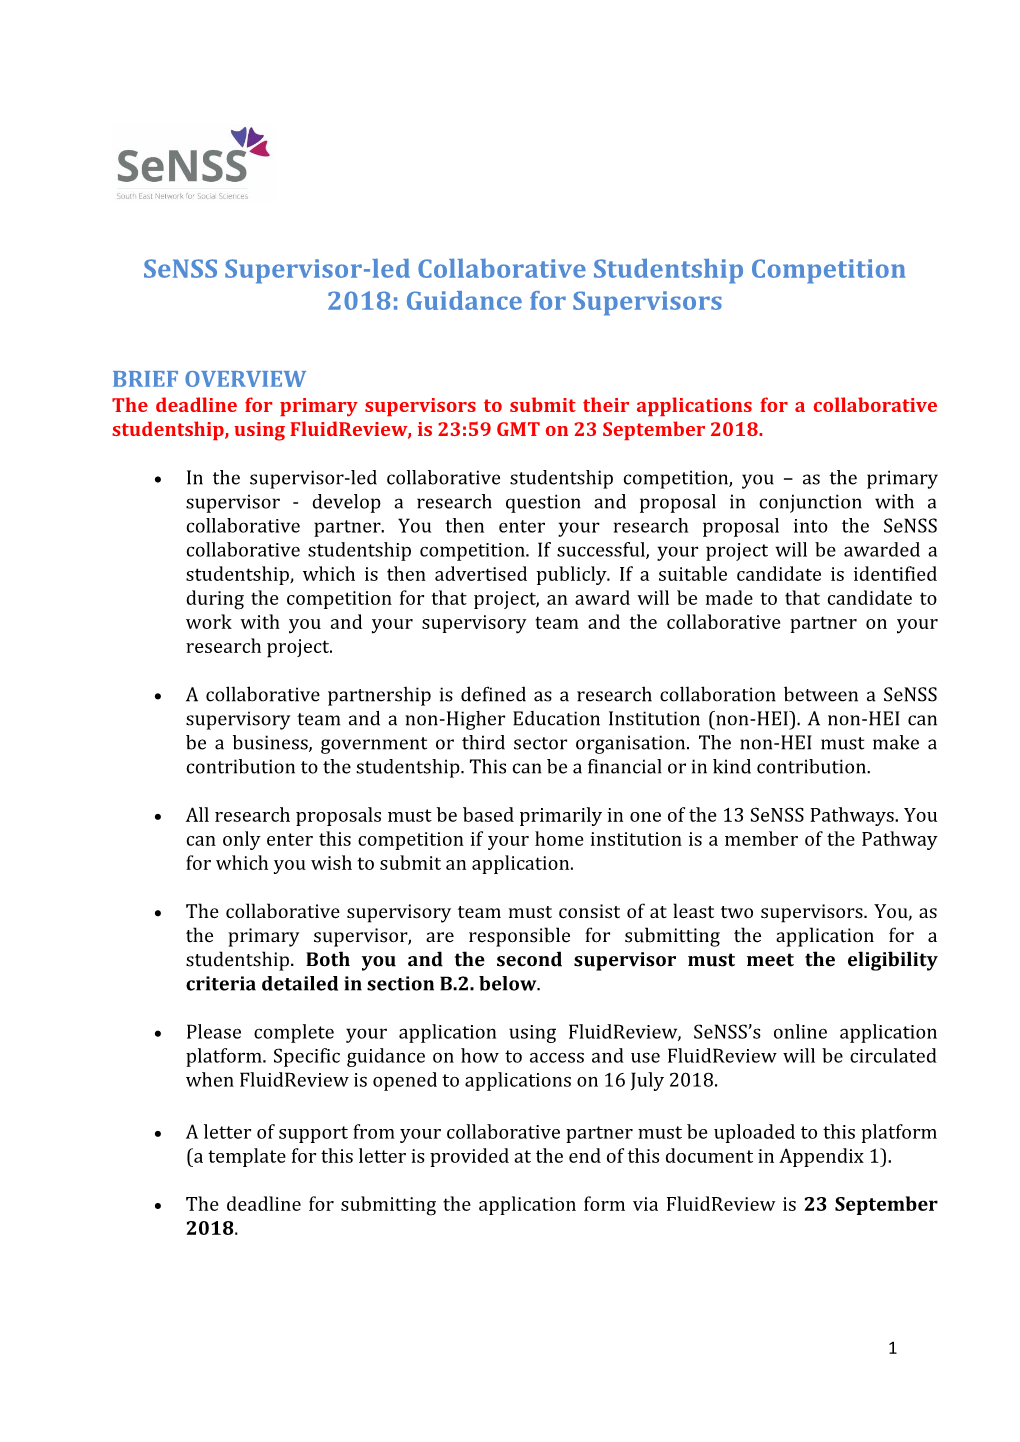 Senss Supervisor-Led Collaborative Studentship Competition 2018: Guidance for Supervisors